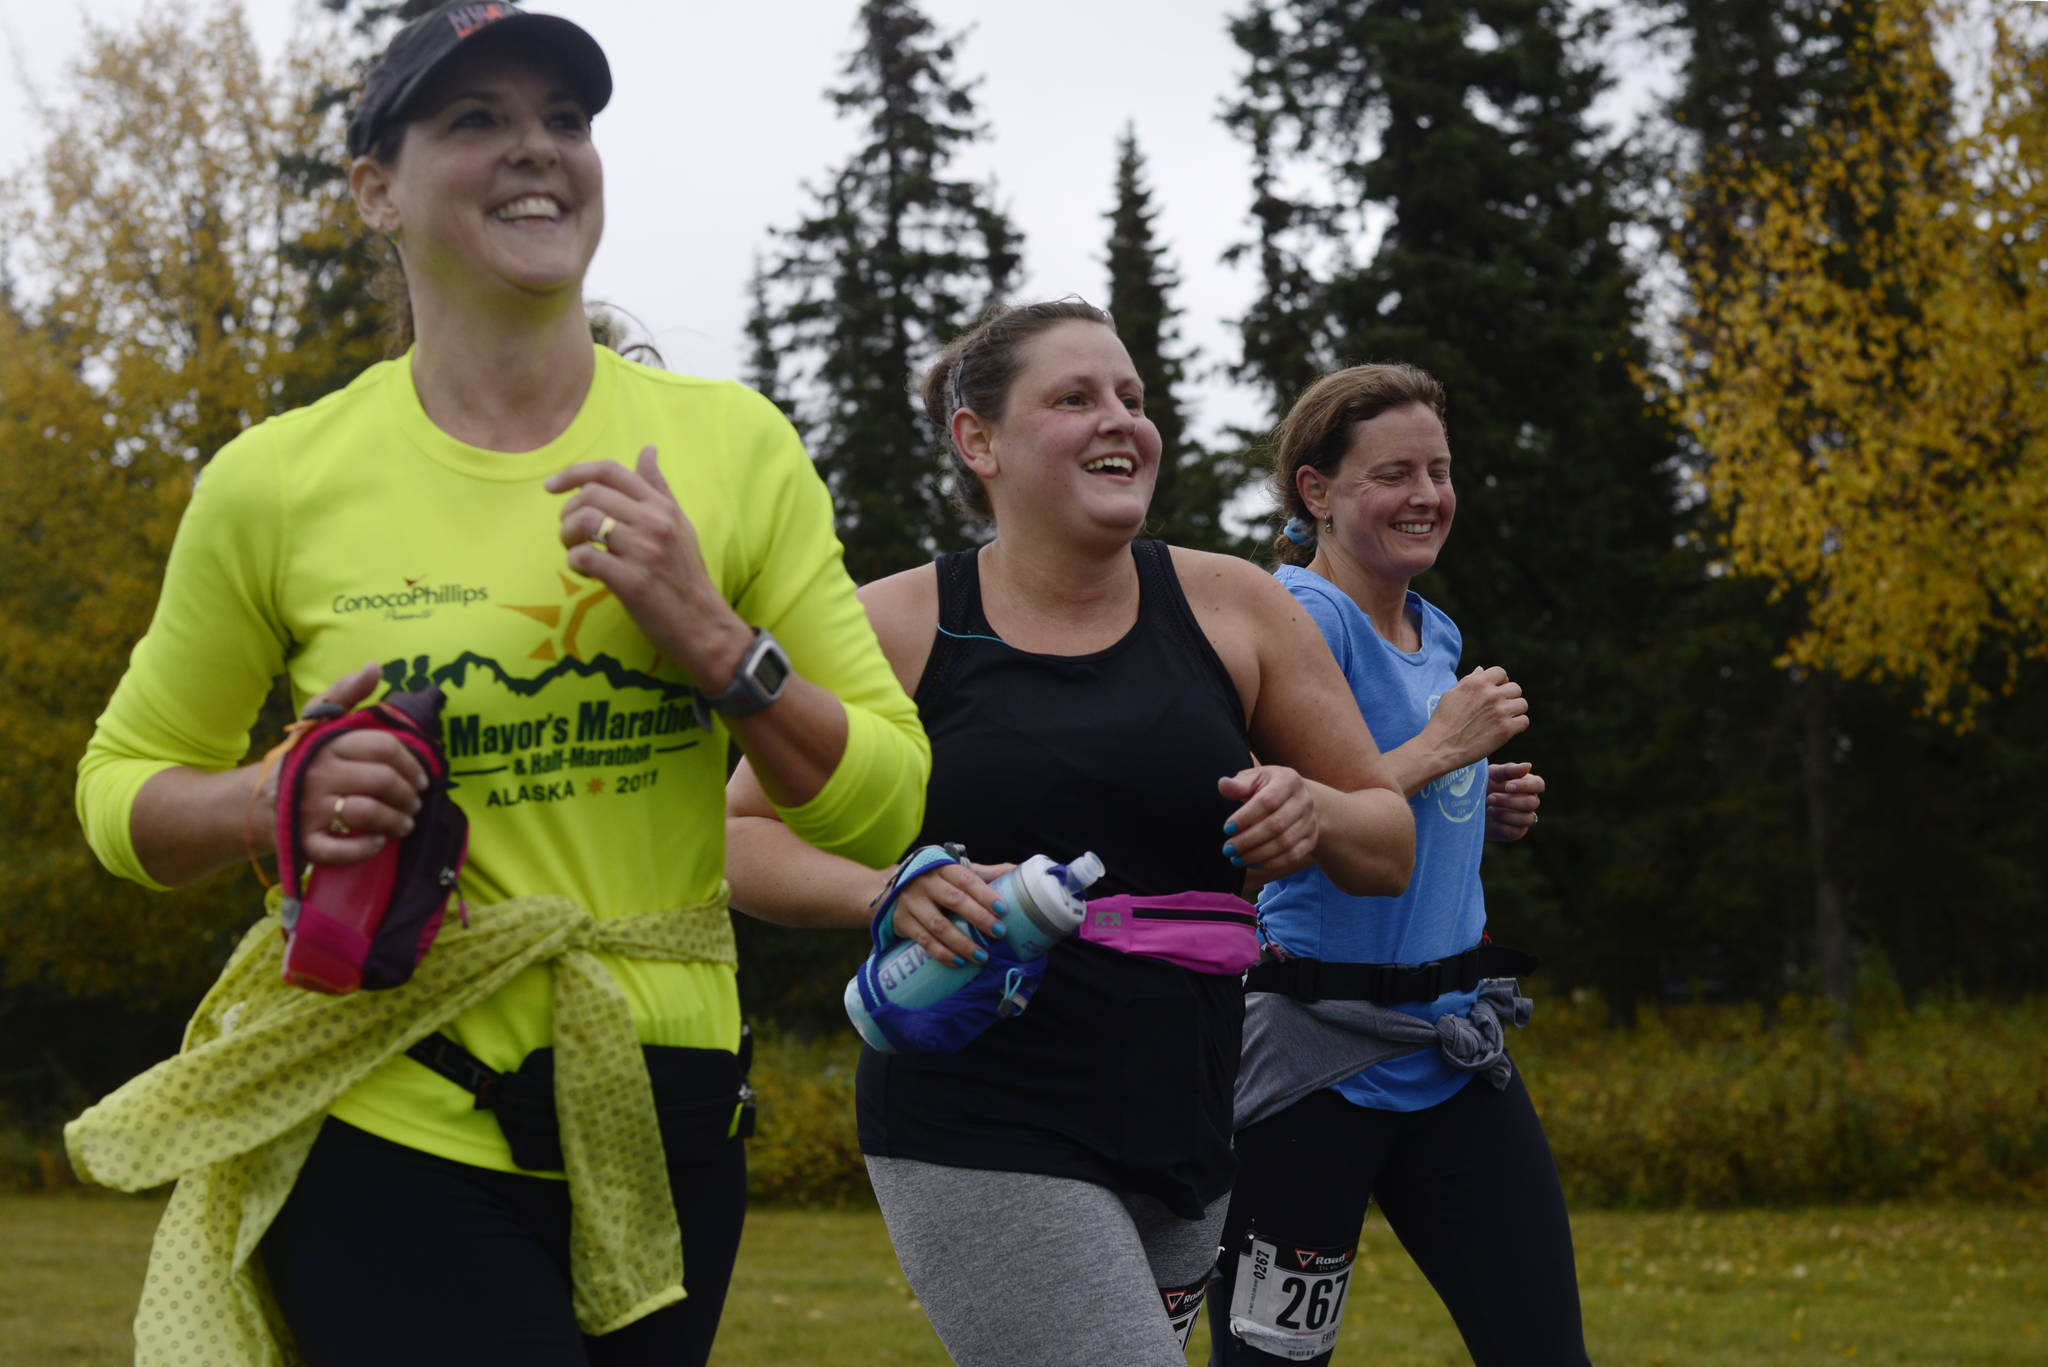 Runners Kimberly Buskirk (left), Kate Swaby, and Candace Cartwright run in the Kenai River half-marathon on Sunday, Sept. 24, 2017 in Kenai, Alaska.